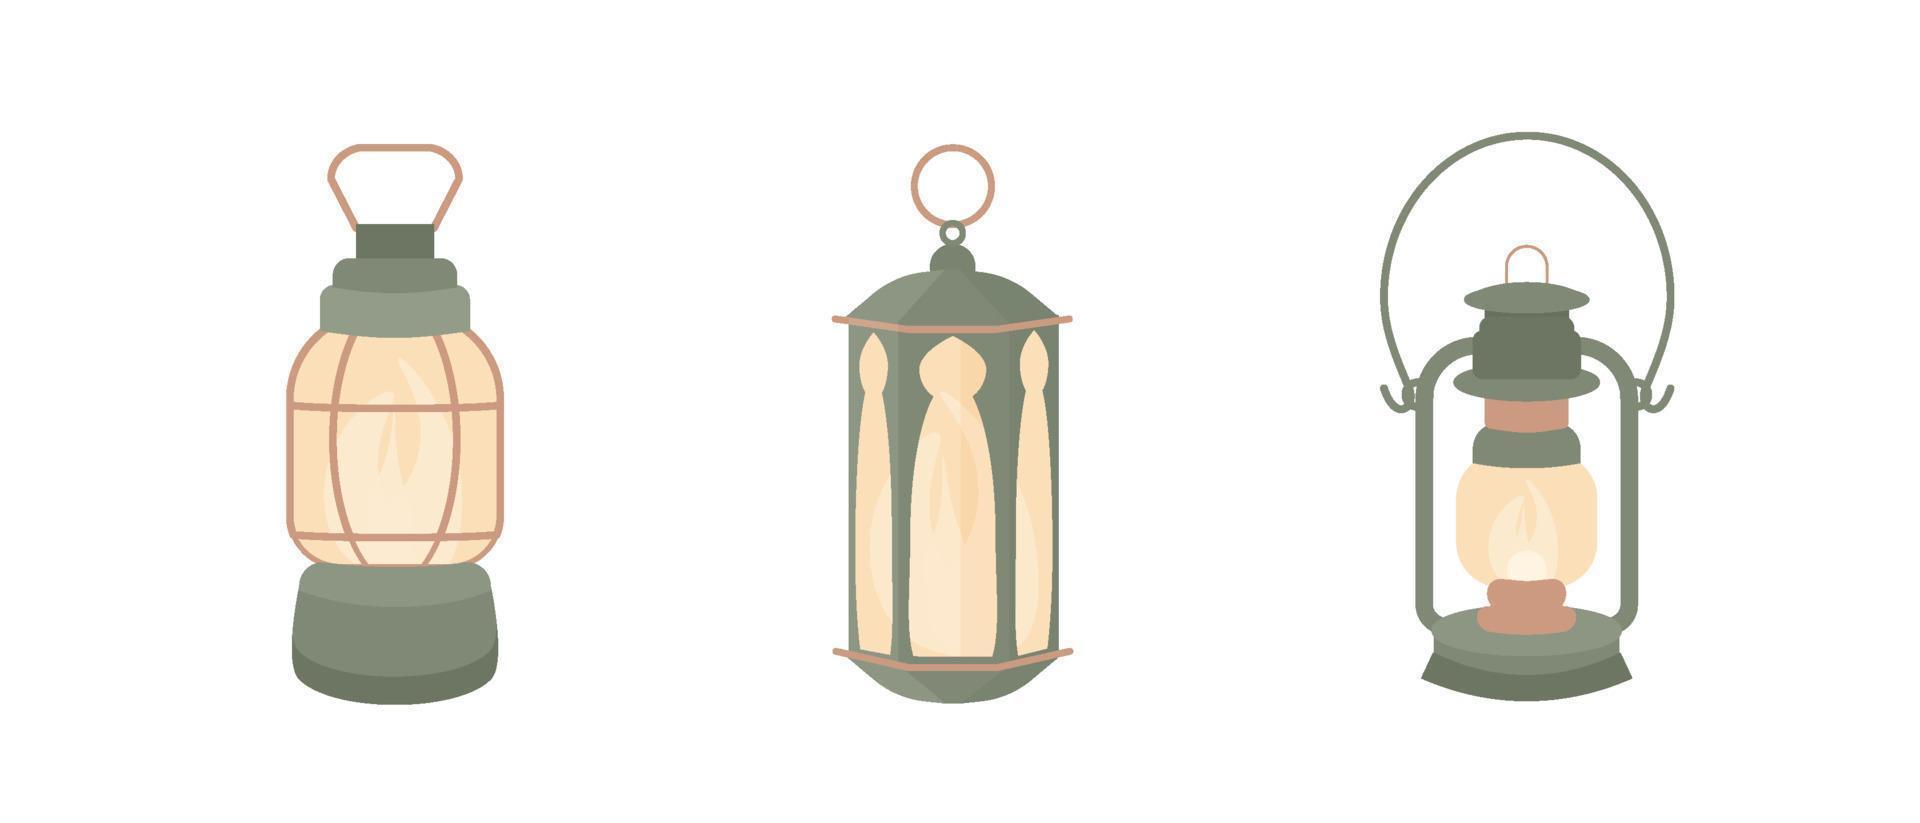 Ramadan kareem lanterna impostato nel islamico stile. vettore leggero lampada